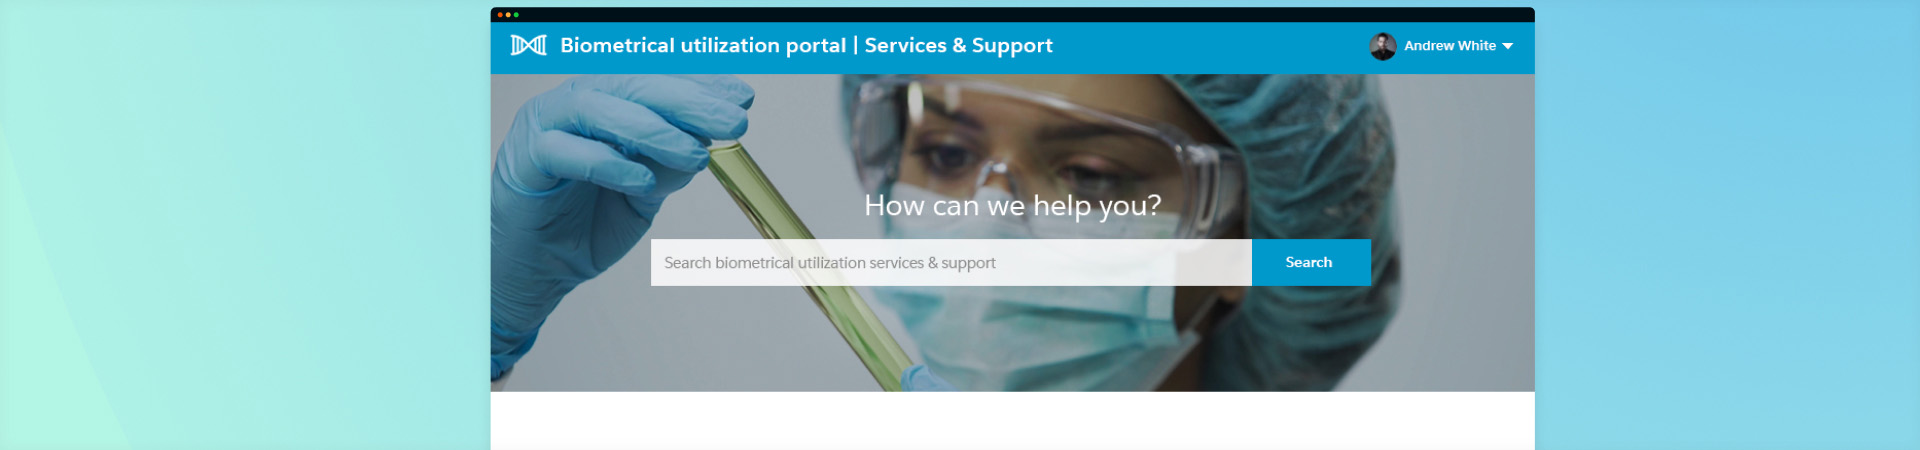 ServiceNow® Portal Development for Biomaterial Usage Regulation